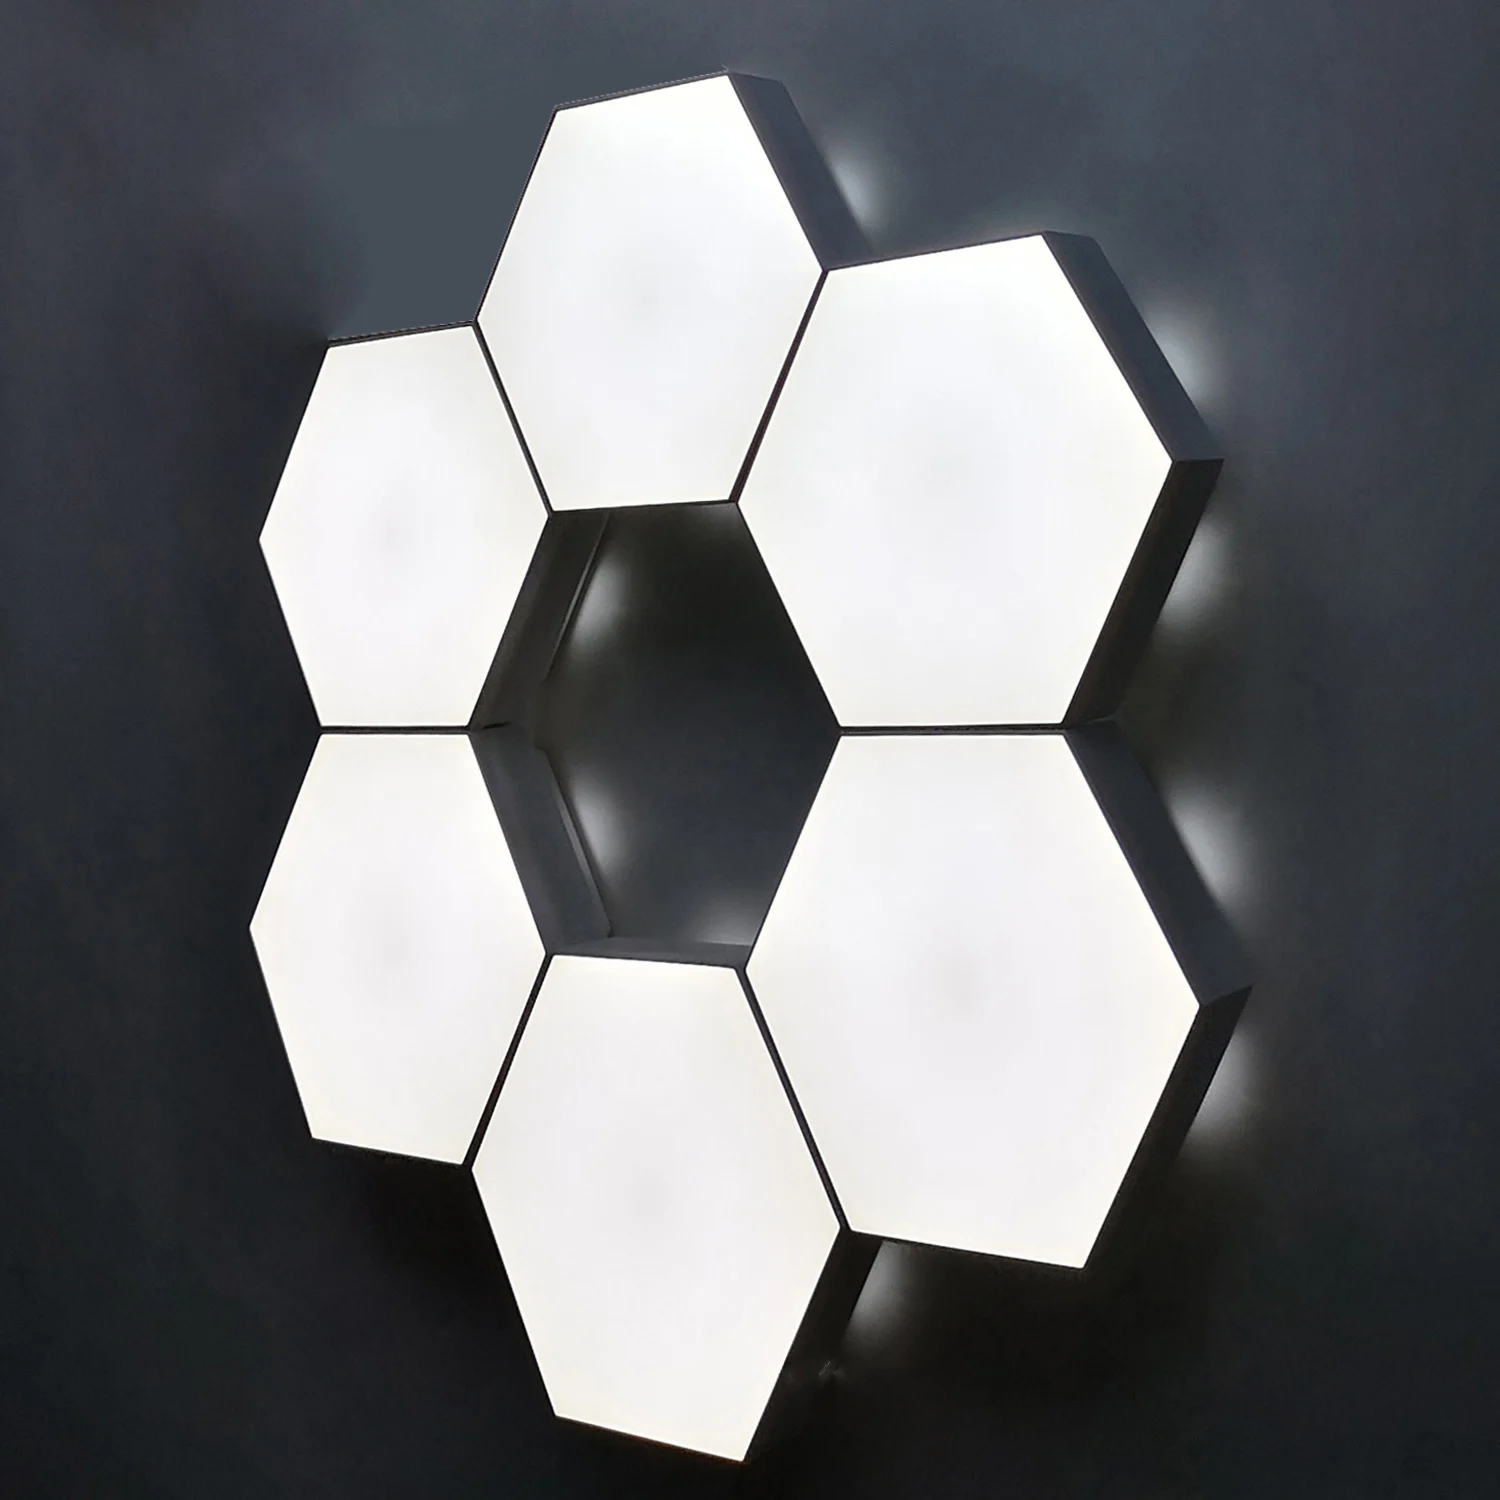 6PCS Quantum Honeycomb Mosaic Color Version Hexagonal Modular Touch Sensitive Lighting Wall Lamp LED Night Light